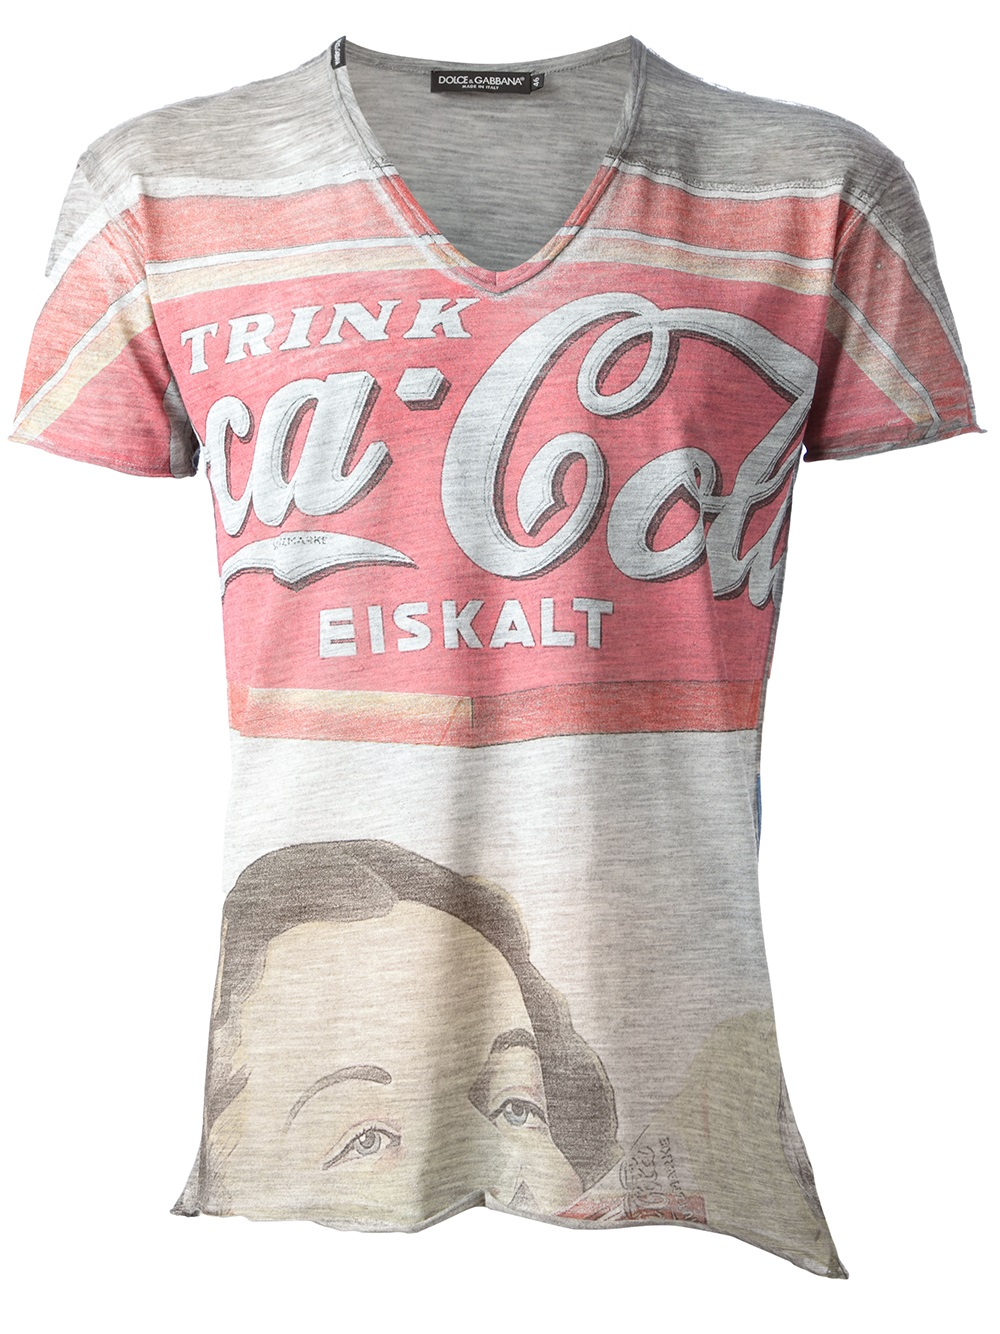 Dolce \u0026 Gabbana Coca Cola Tshirt in 